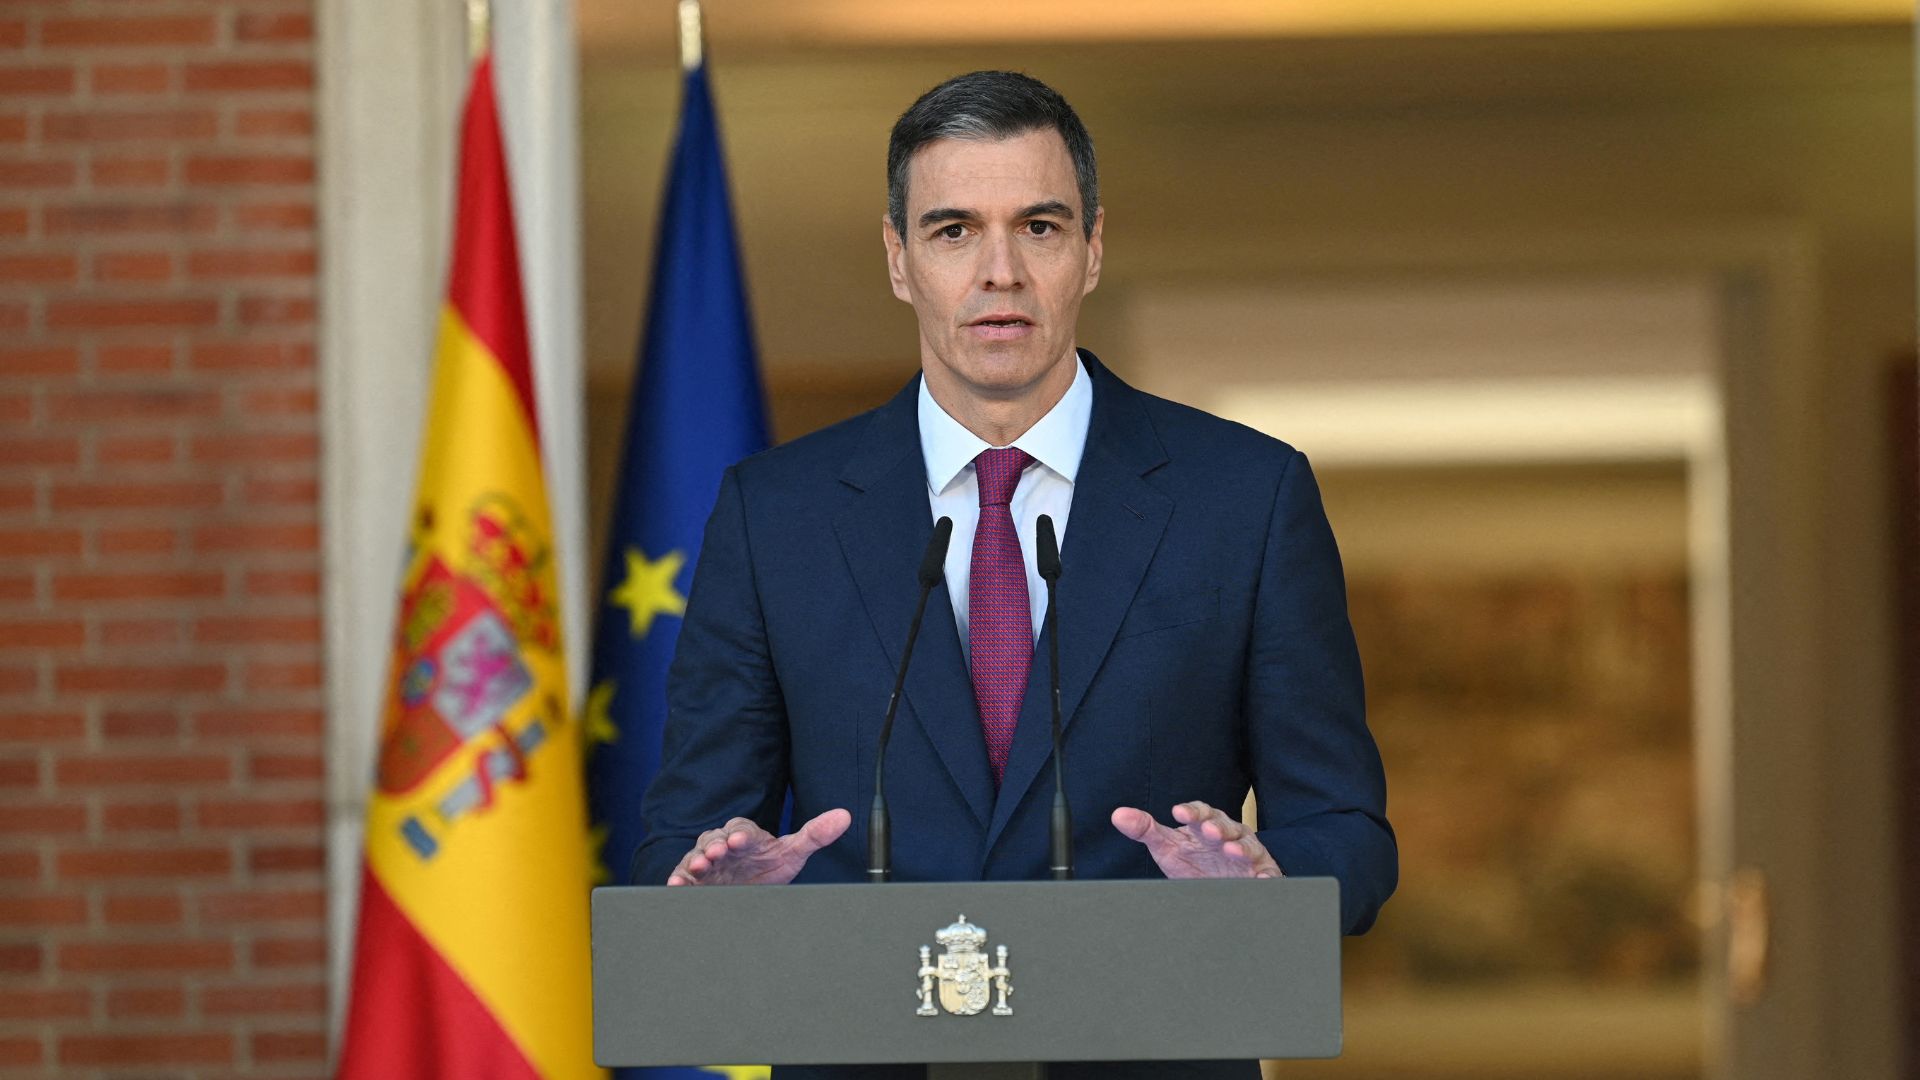 Spain's Prime Minister Pedro Sanchez says Milei is 'not up to the task' of leading an important bilateral relationship. /Borja Puig de la Bellacasa/Pool via Reuters